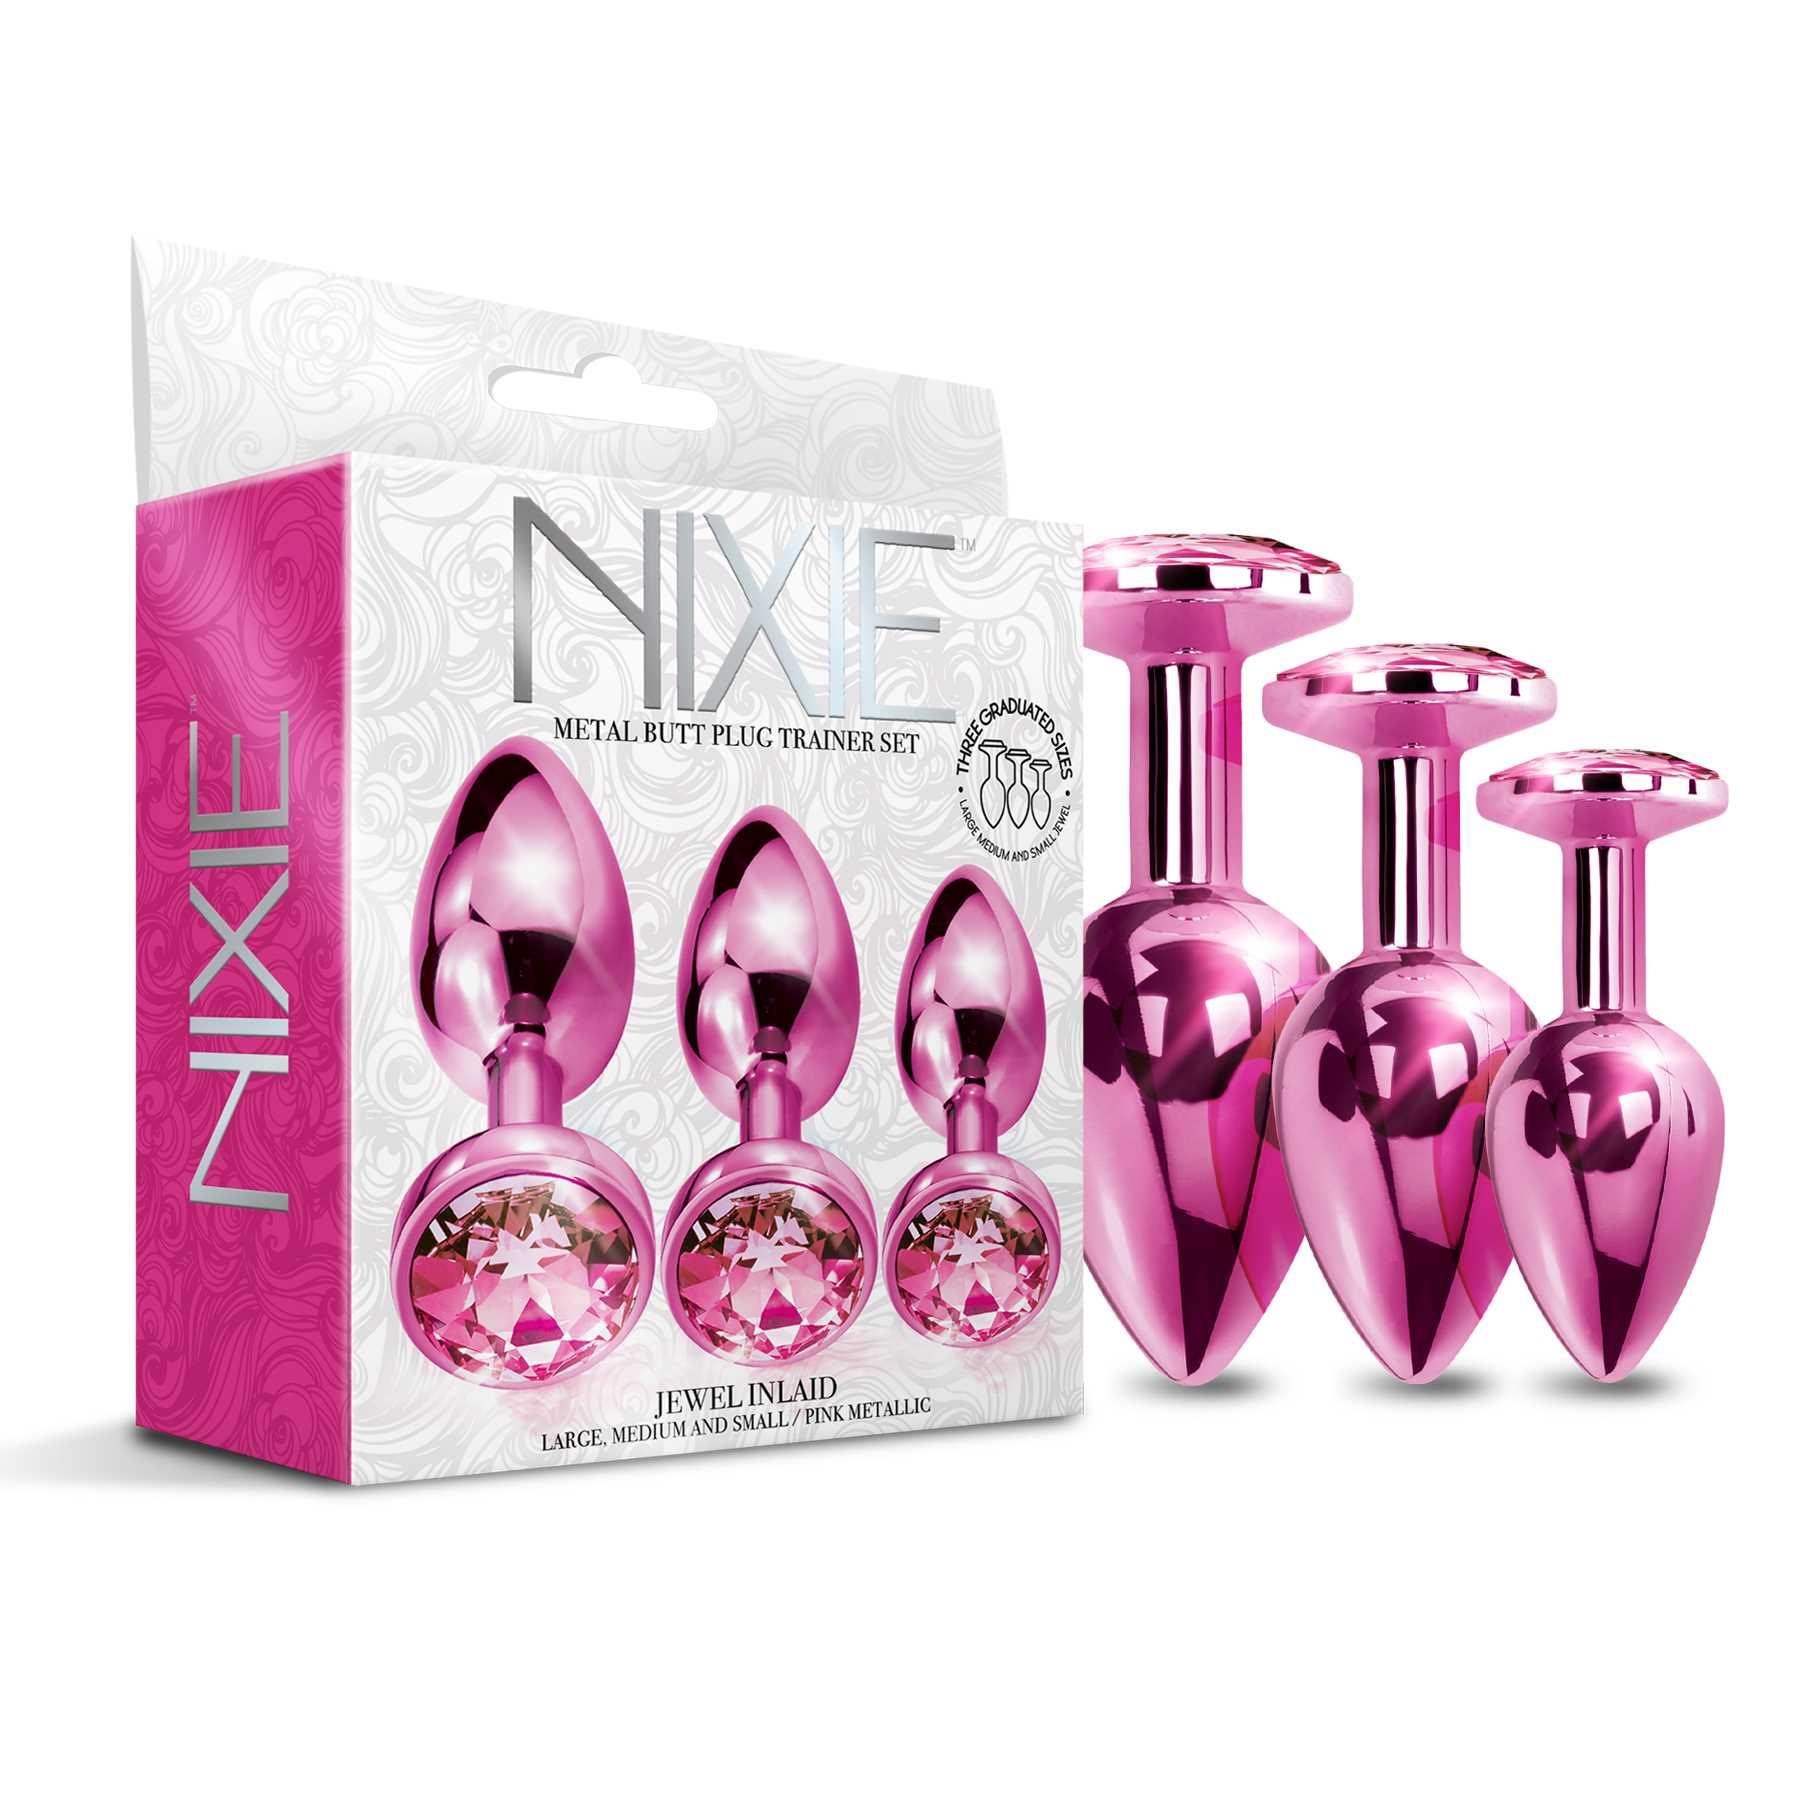 NIXIE Metal Butt Plug Trainer Set Metallic pink with box